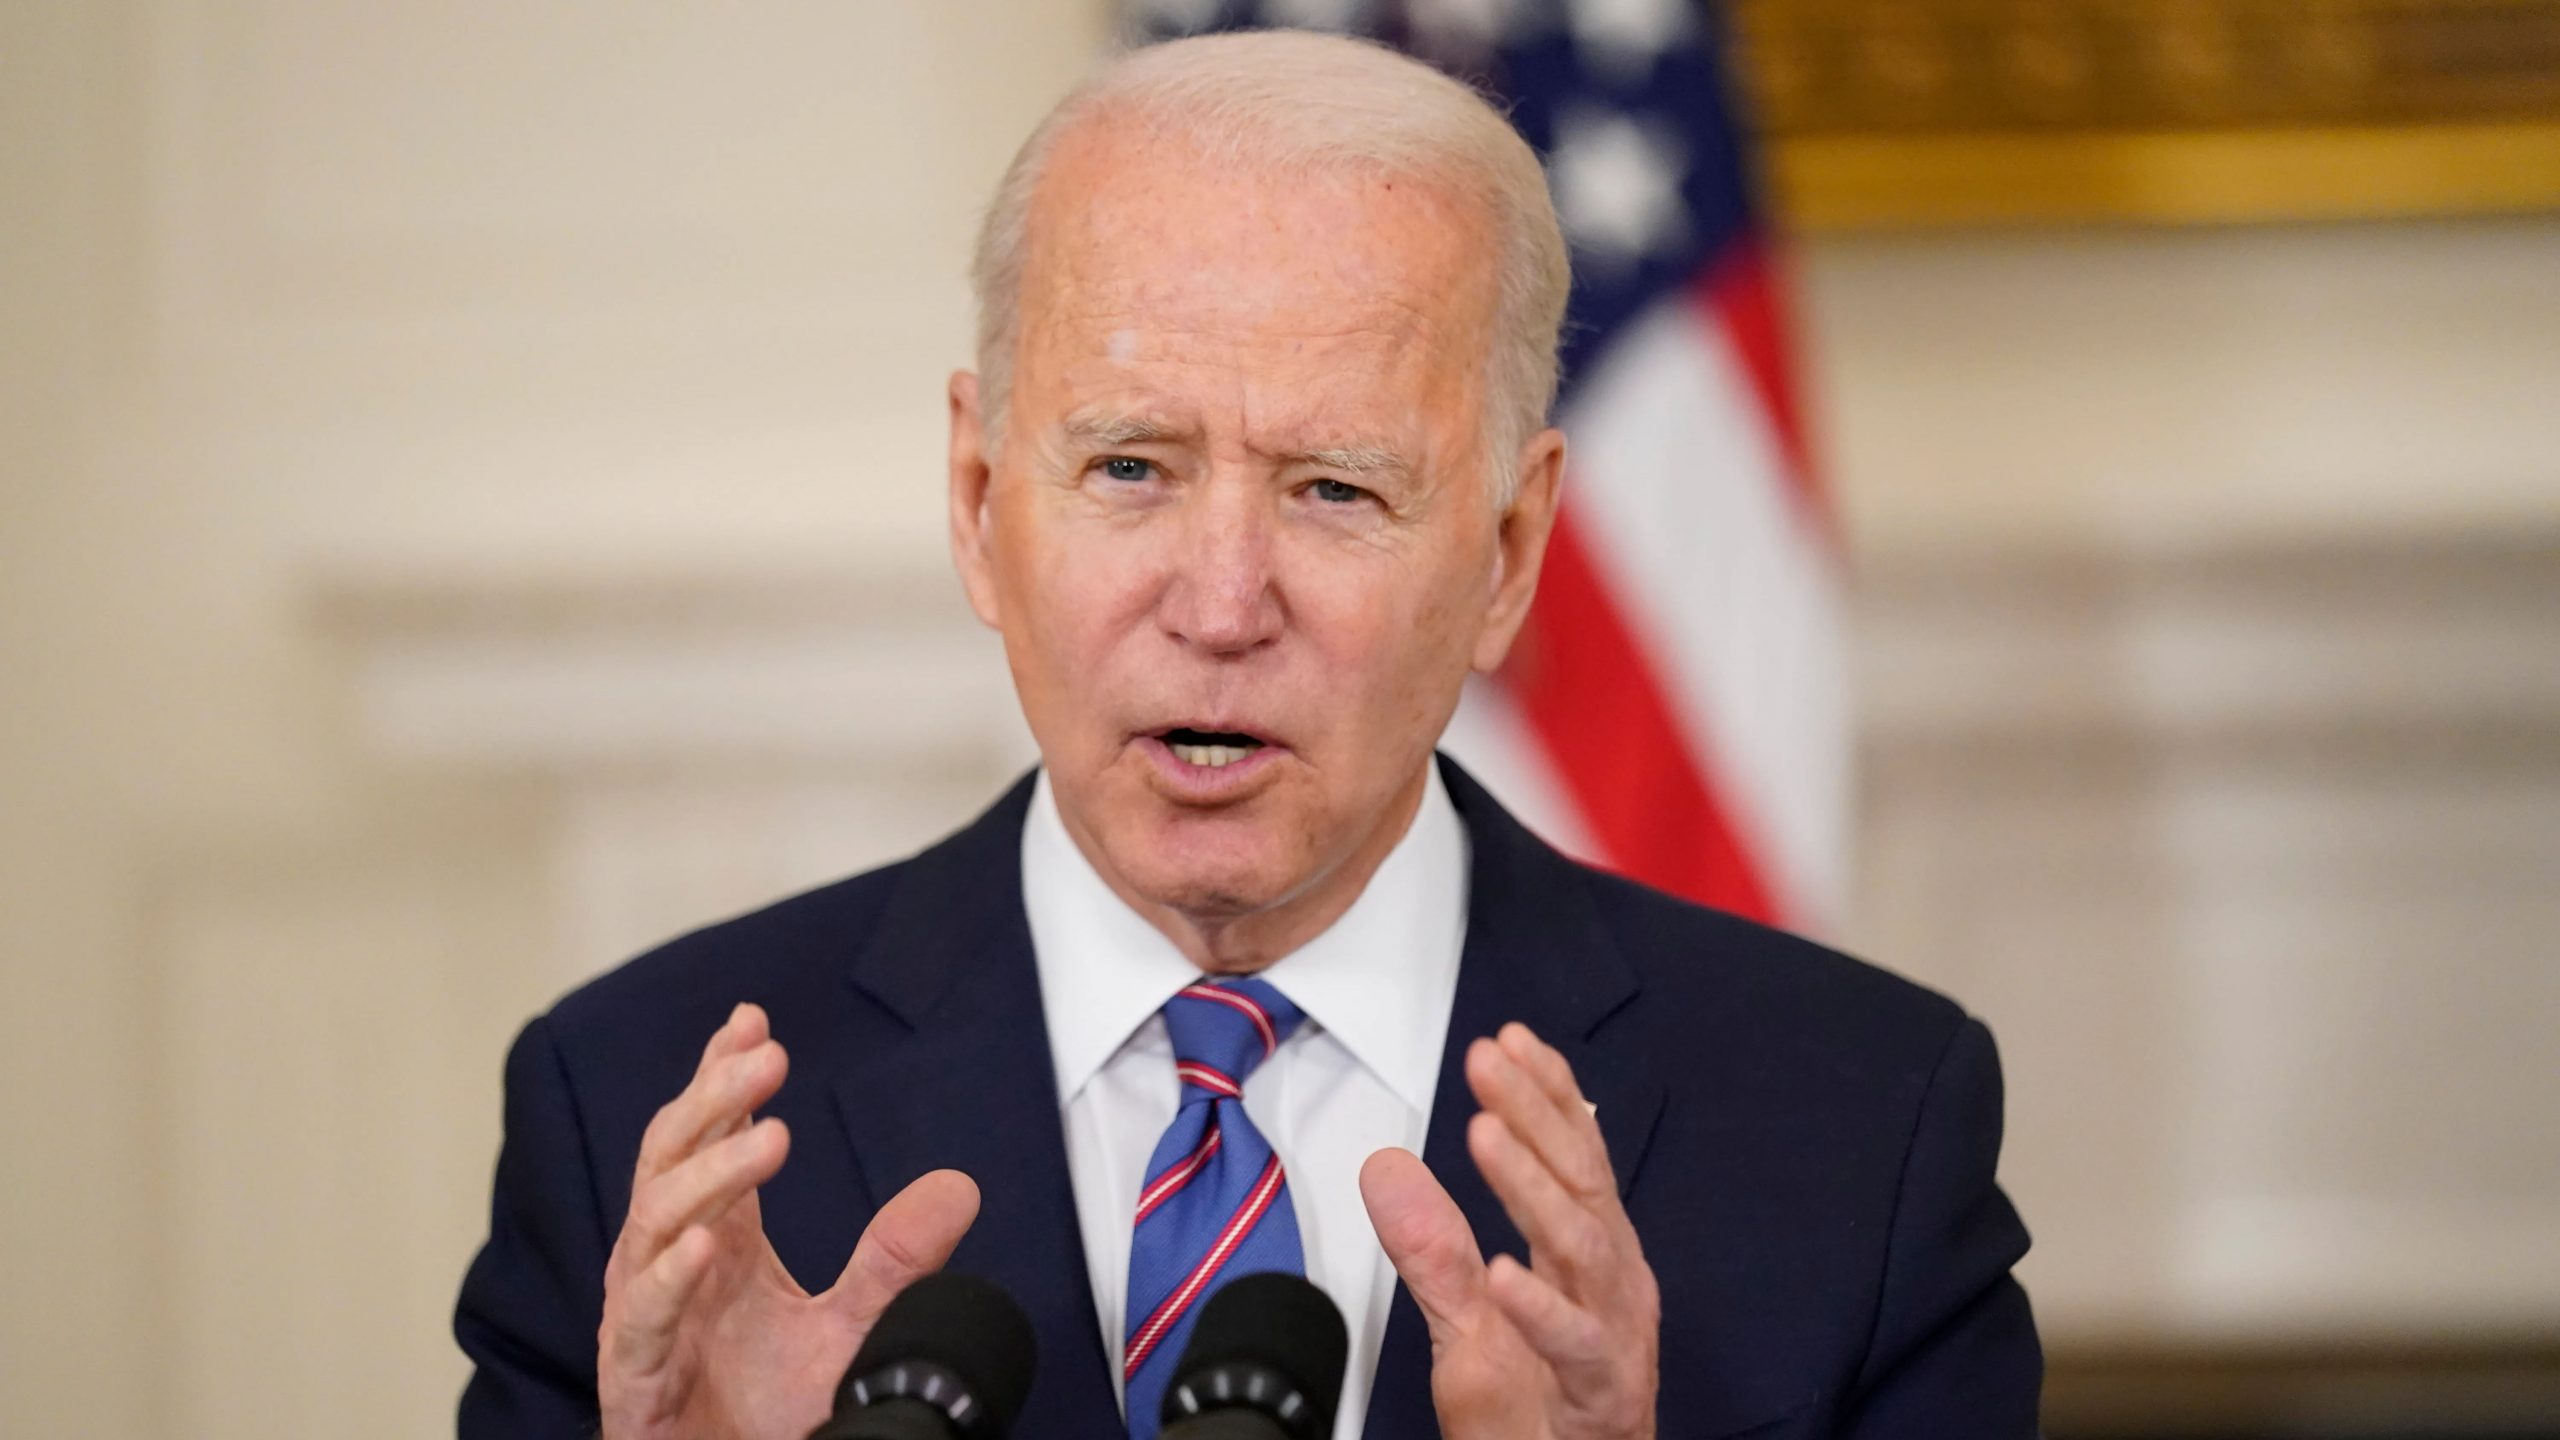 On refugee admission, Joe Biden’s last-minute change in plan